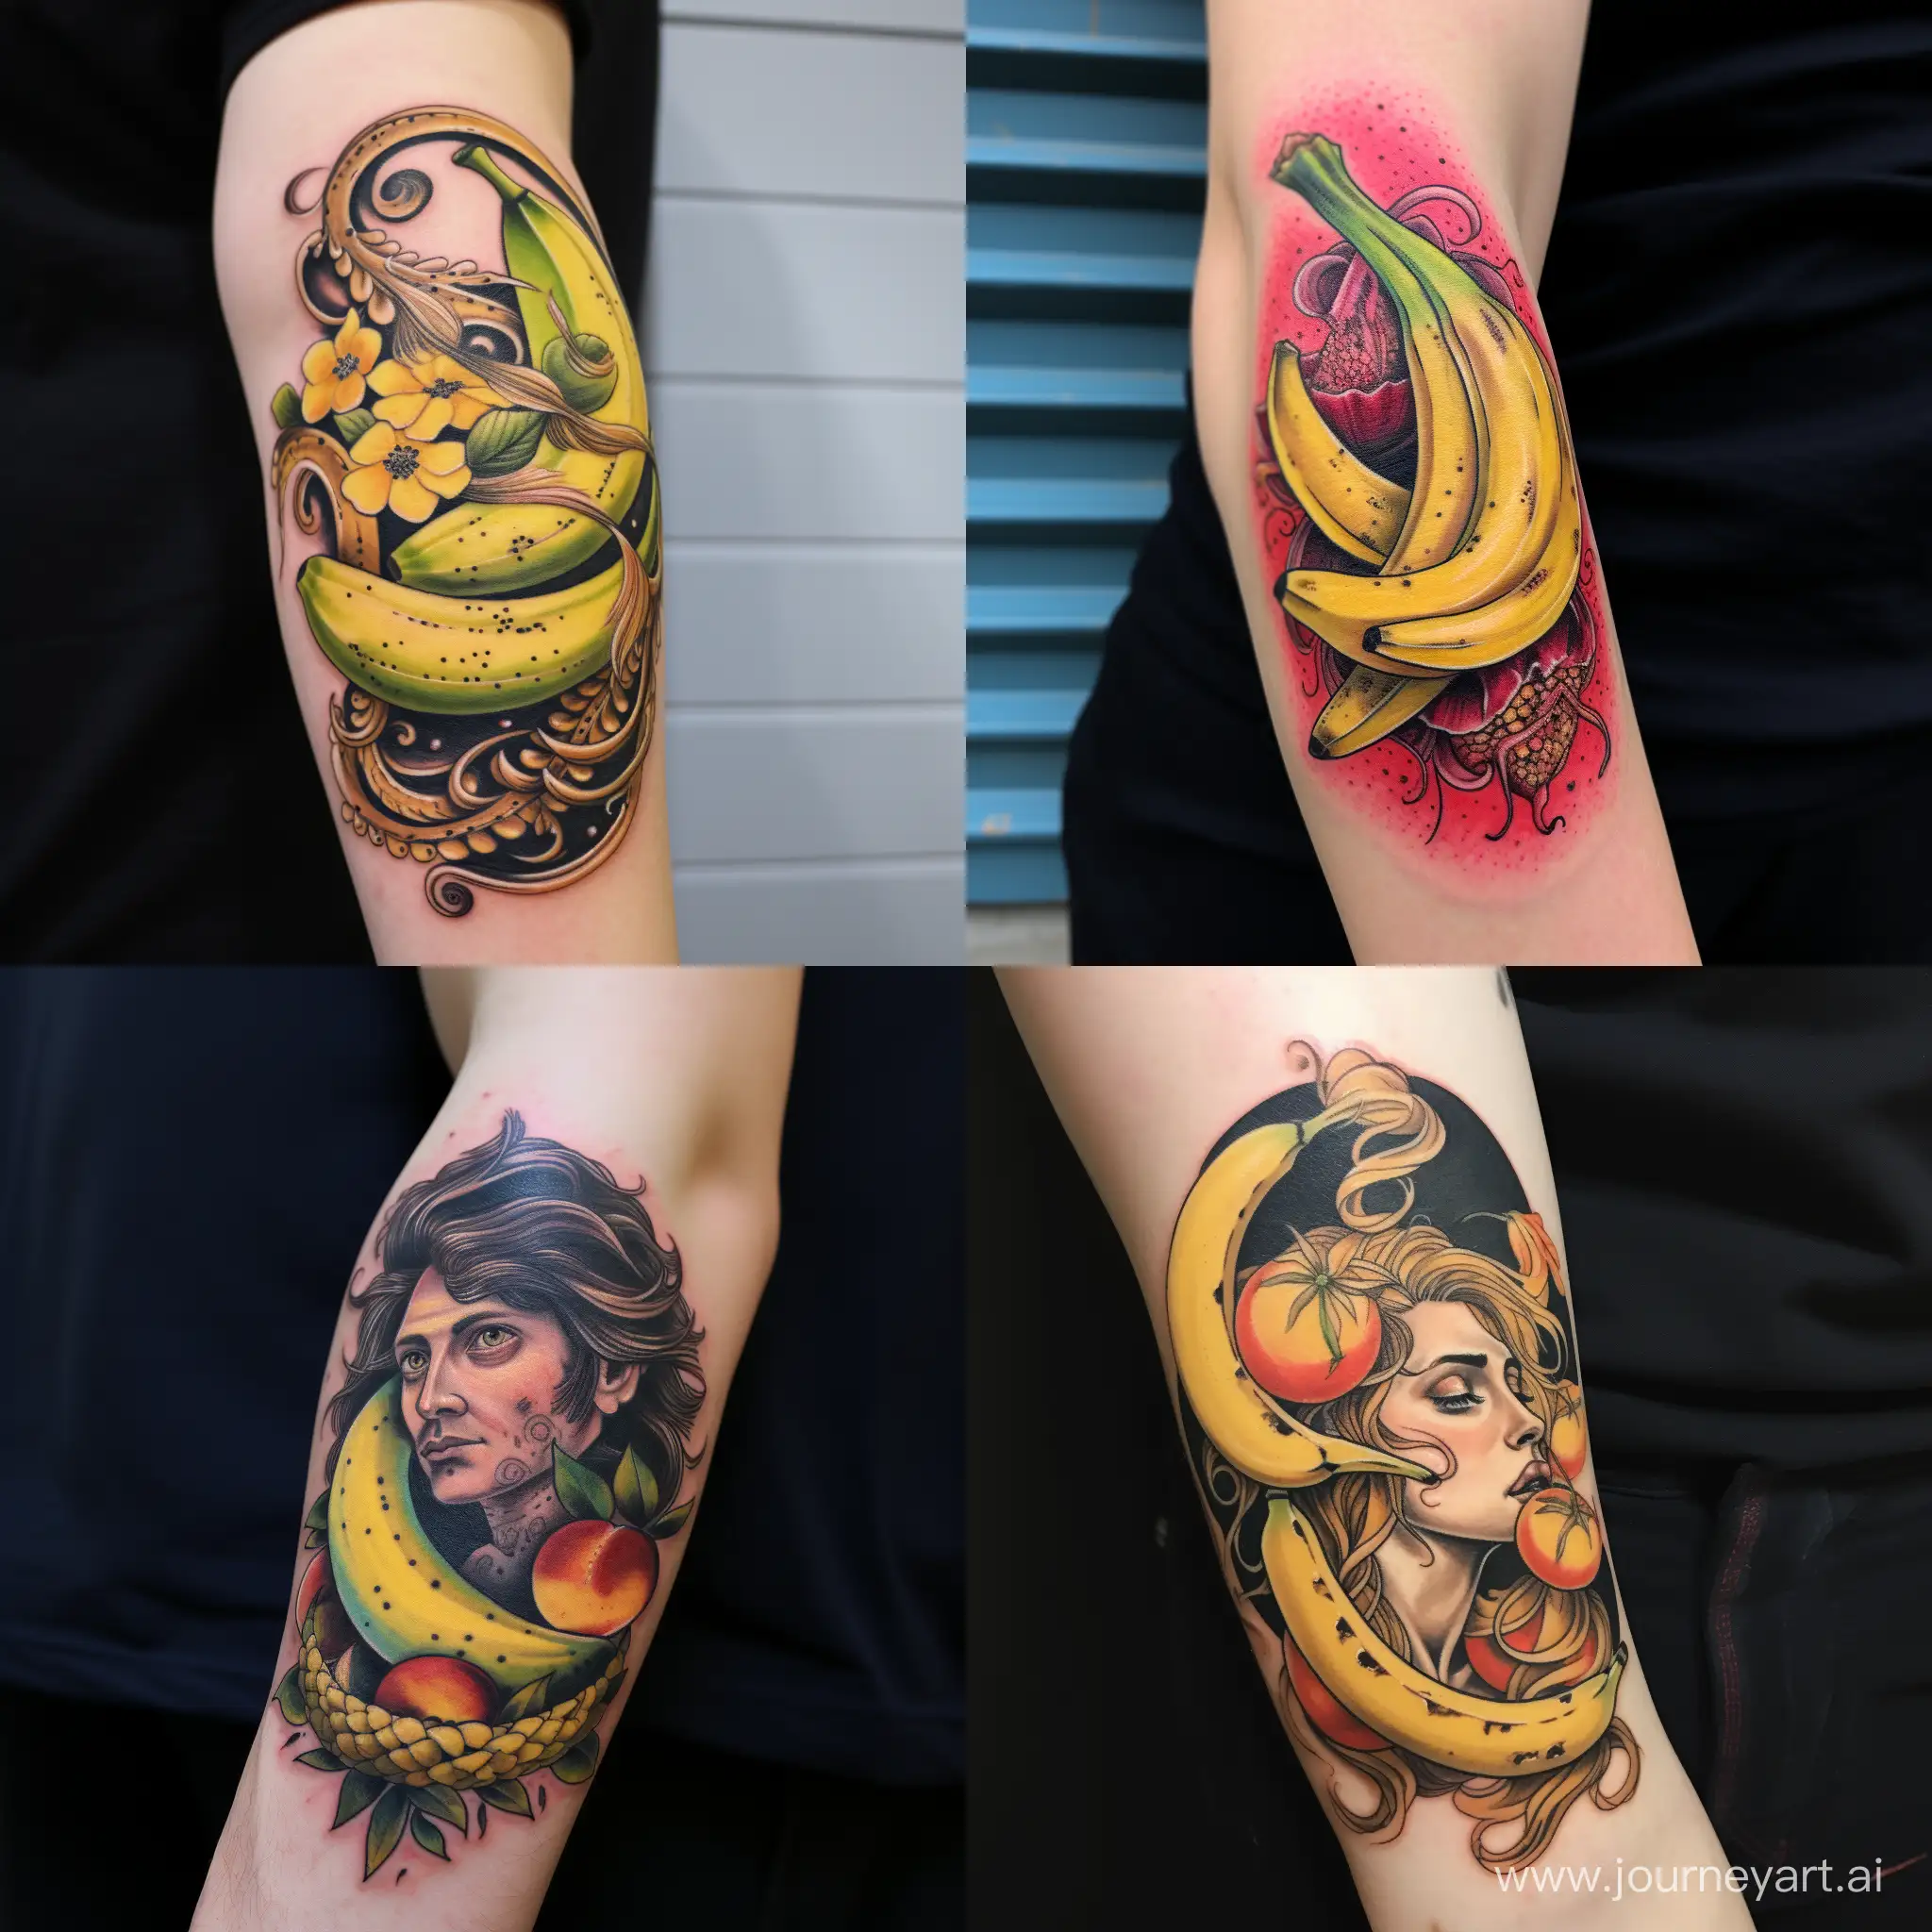 Colorful-Tattooed-Banana-Art